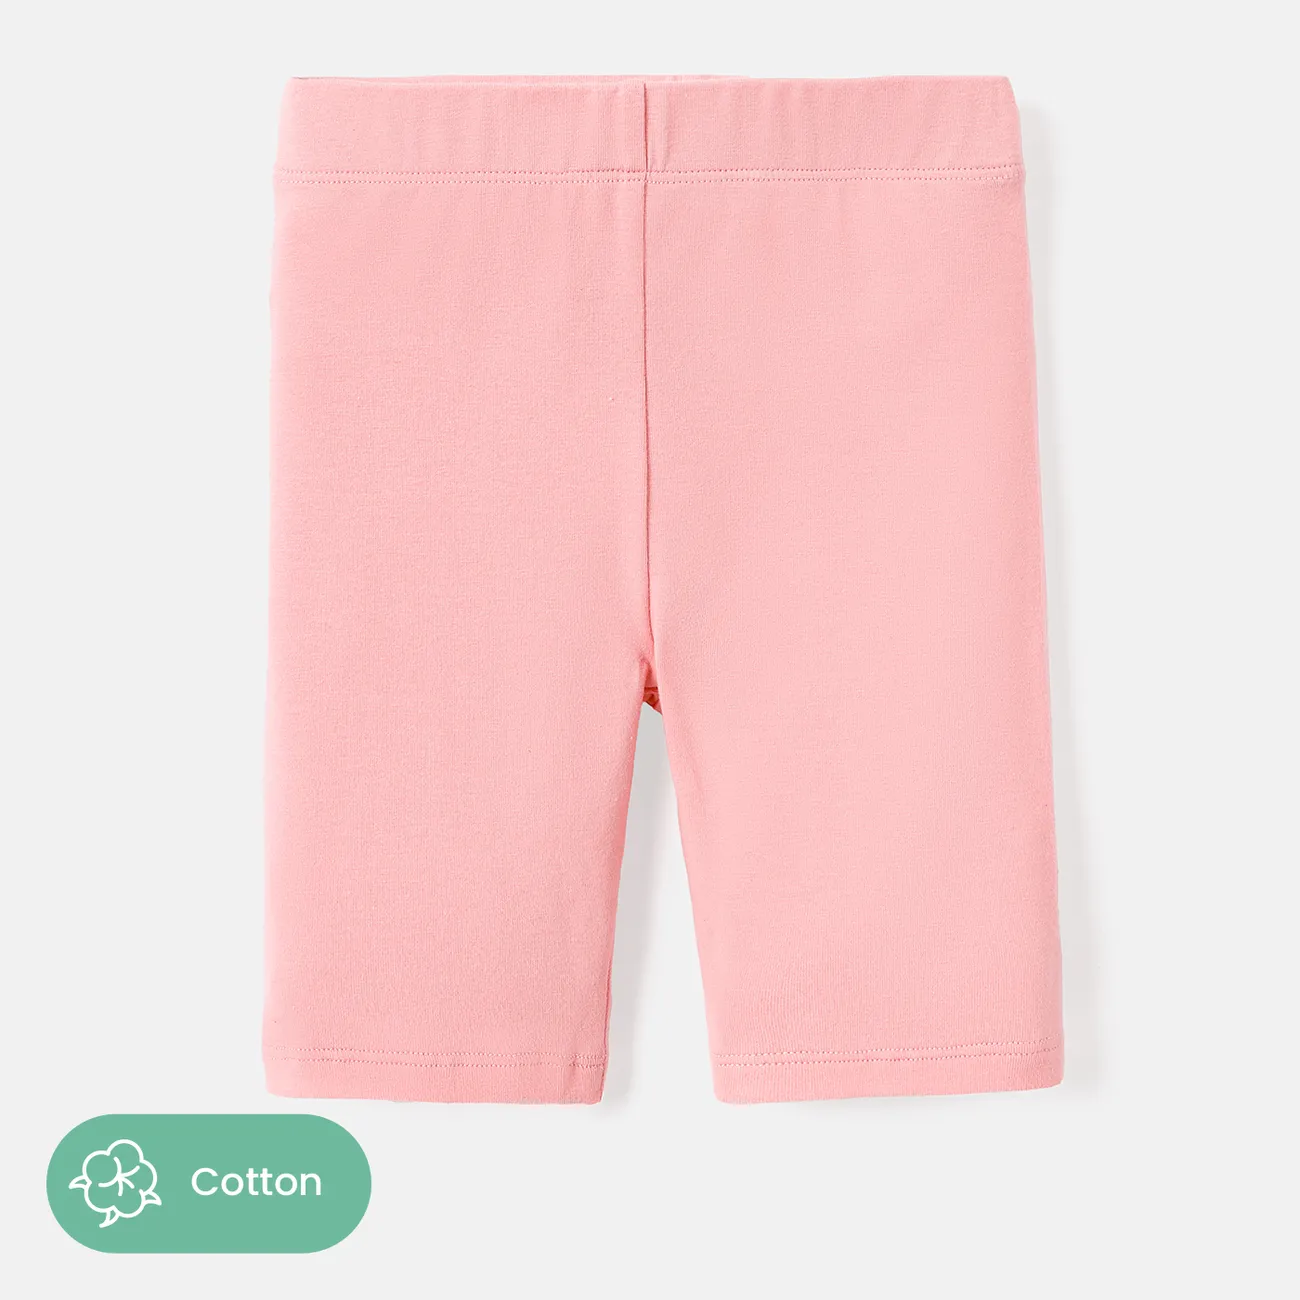 Toddler/Kid Girl Solid Color Cotton Leggings Shorts Pink big image 1